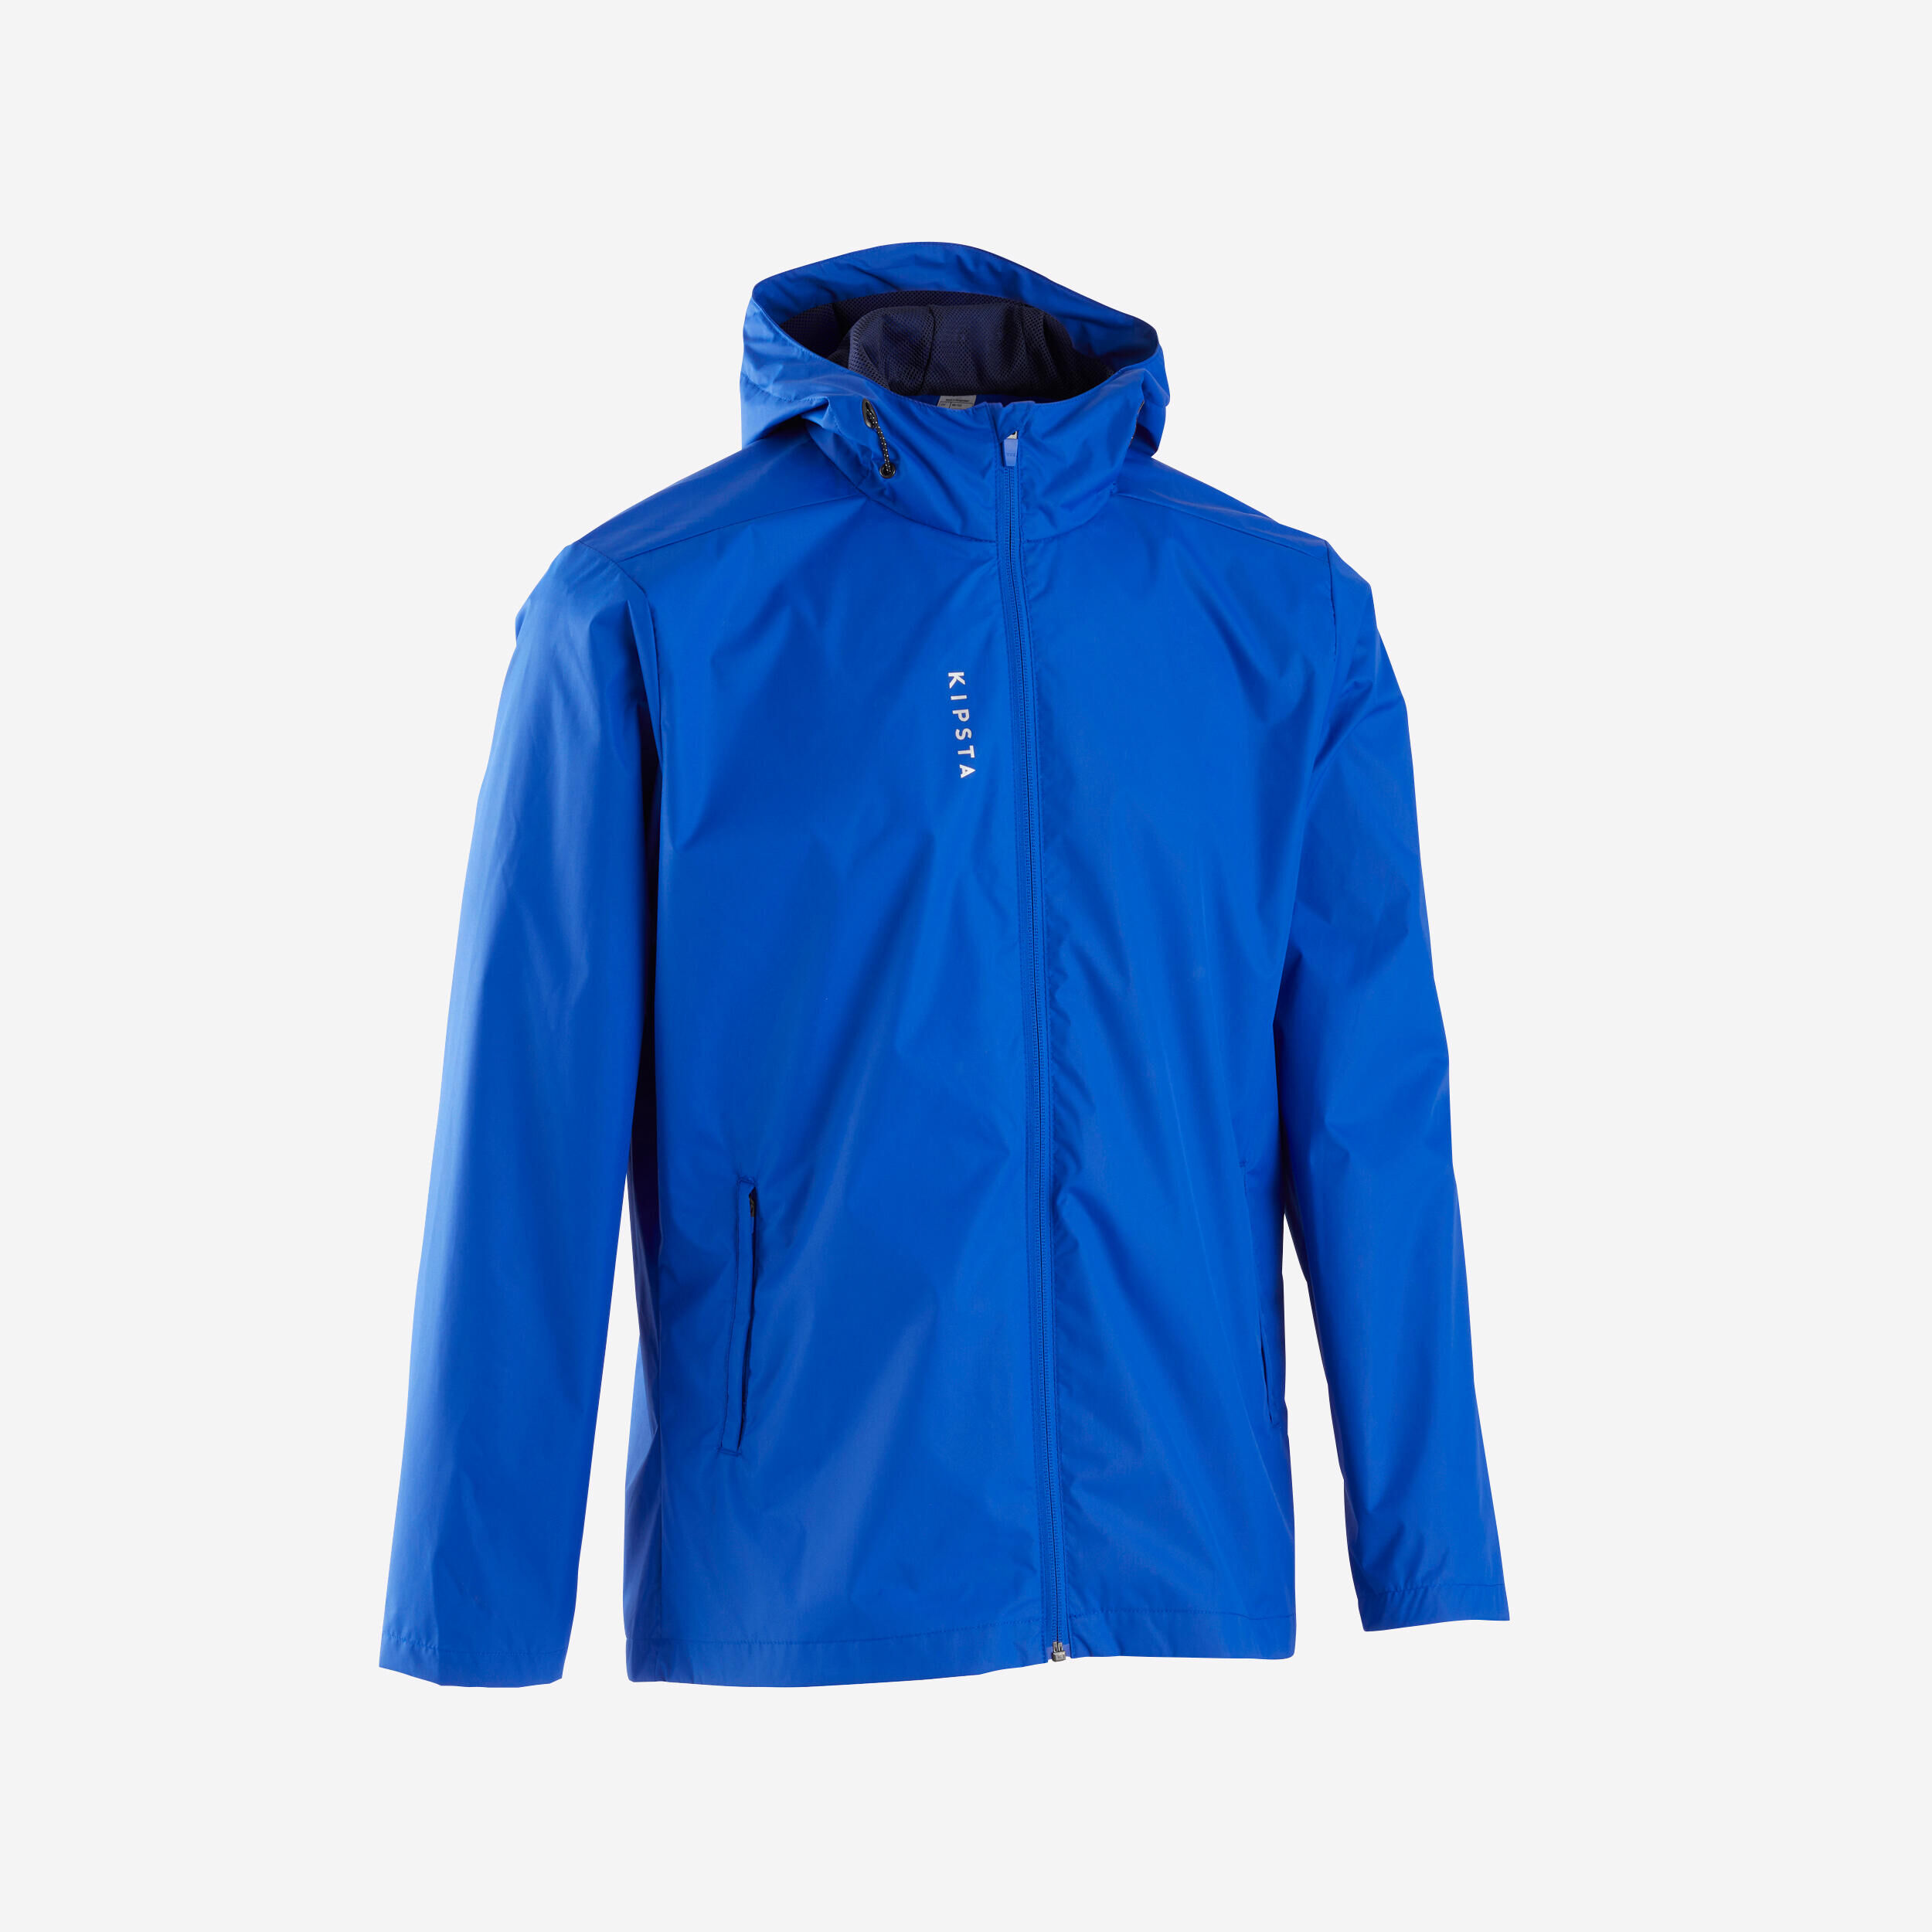 KIPSTA Adult Football Waterproof Jacket T100 - Blue